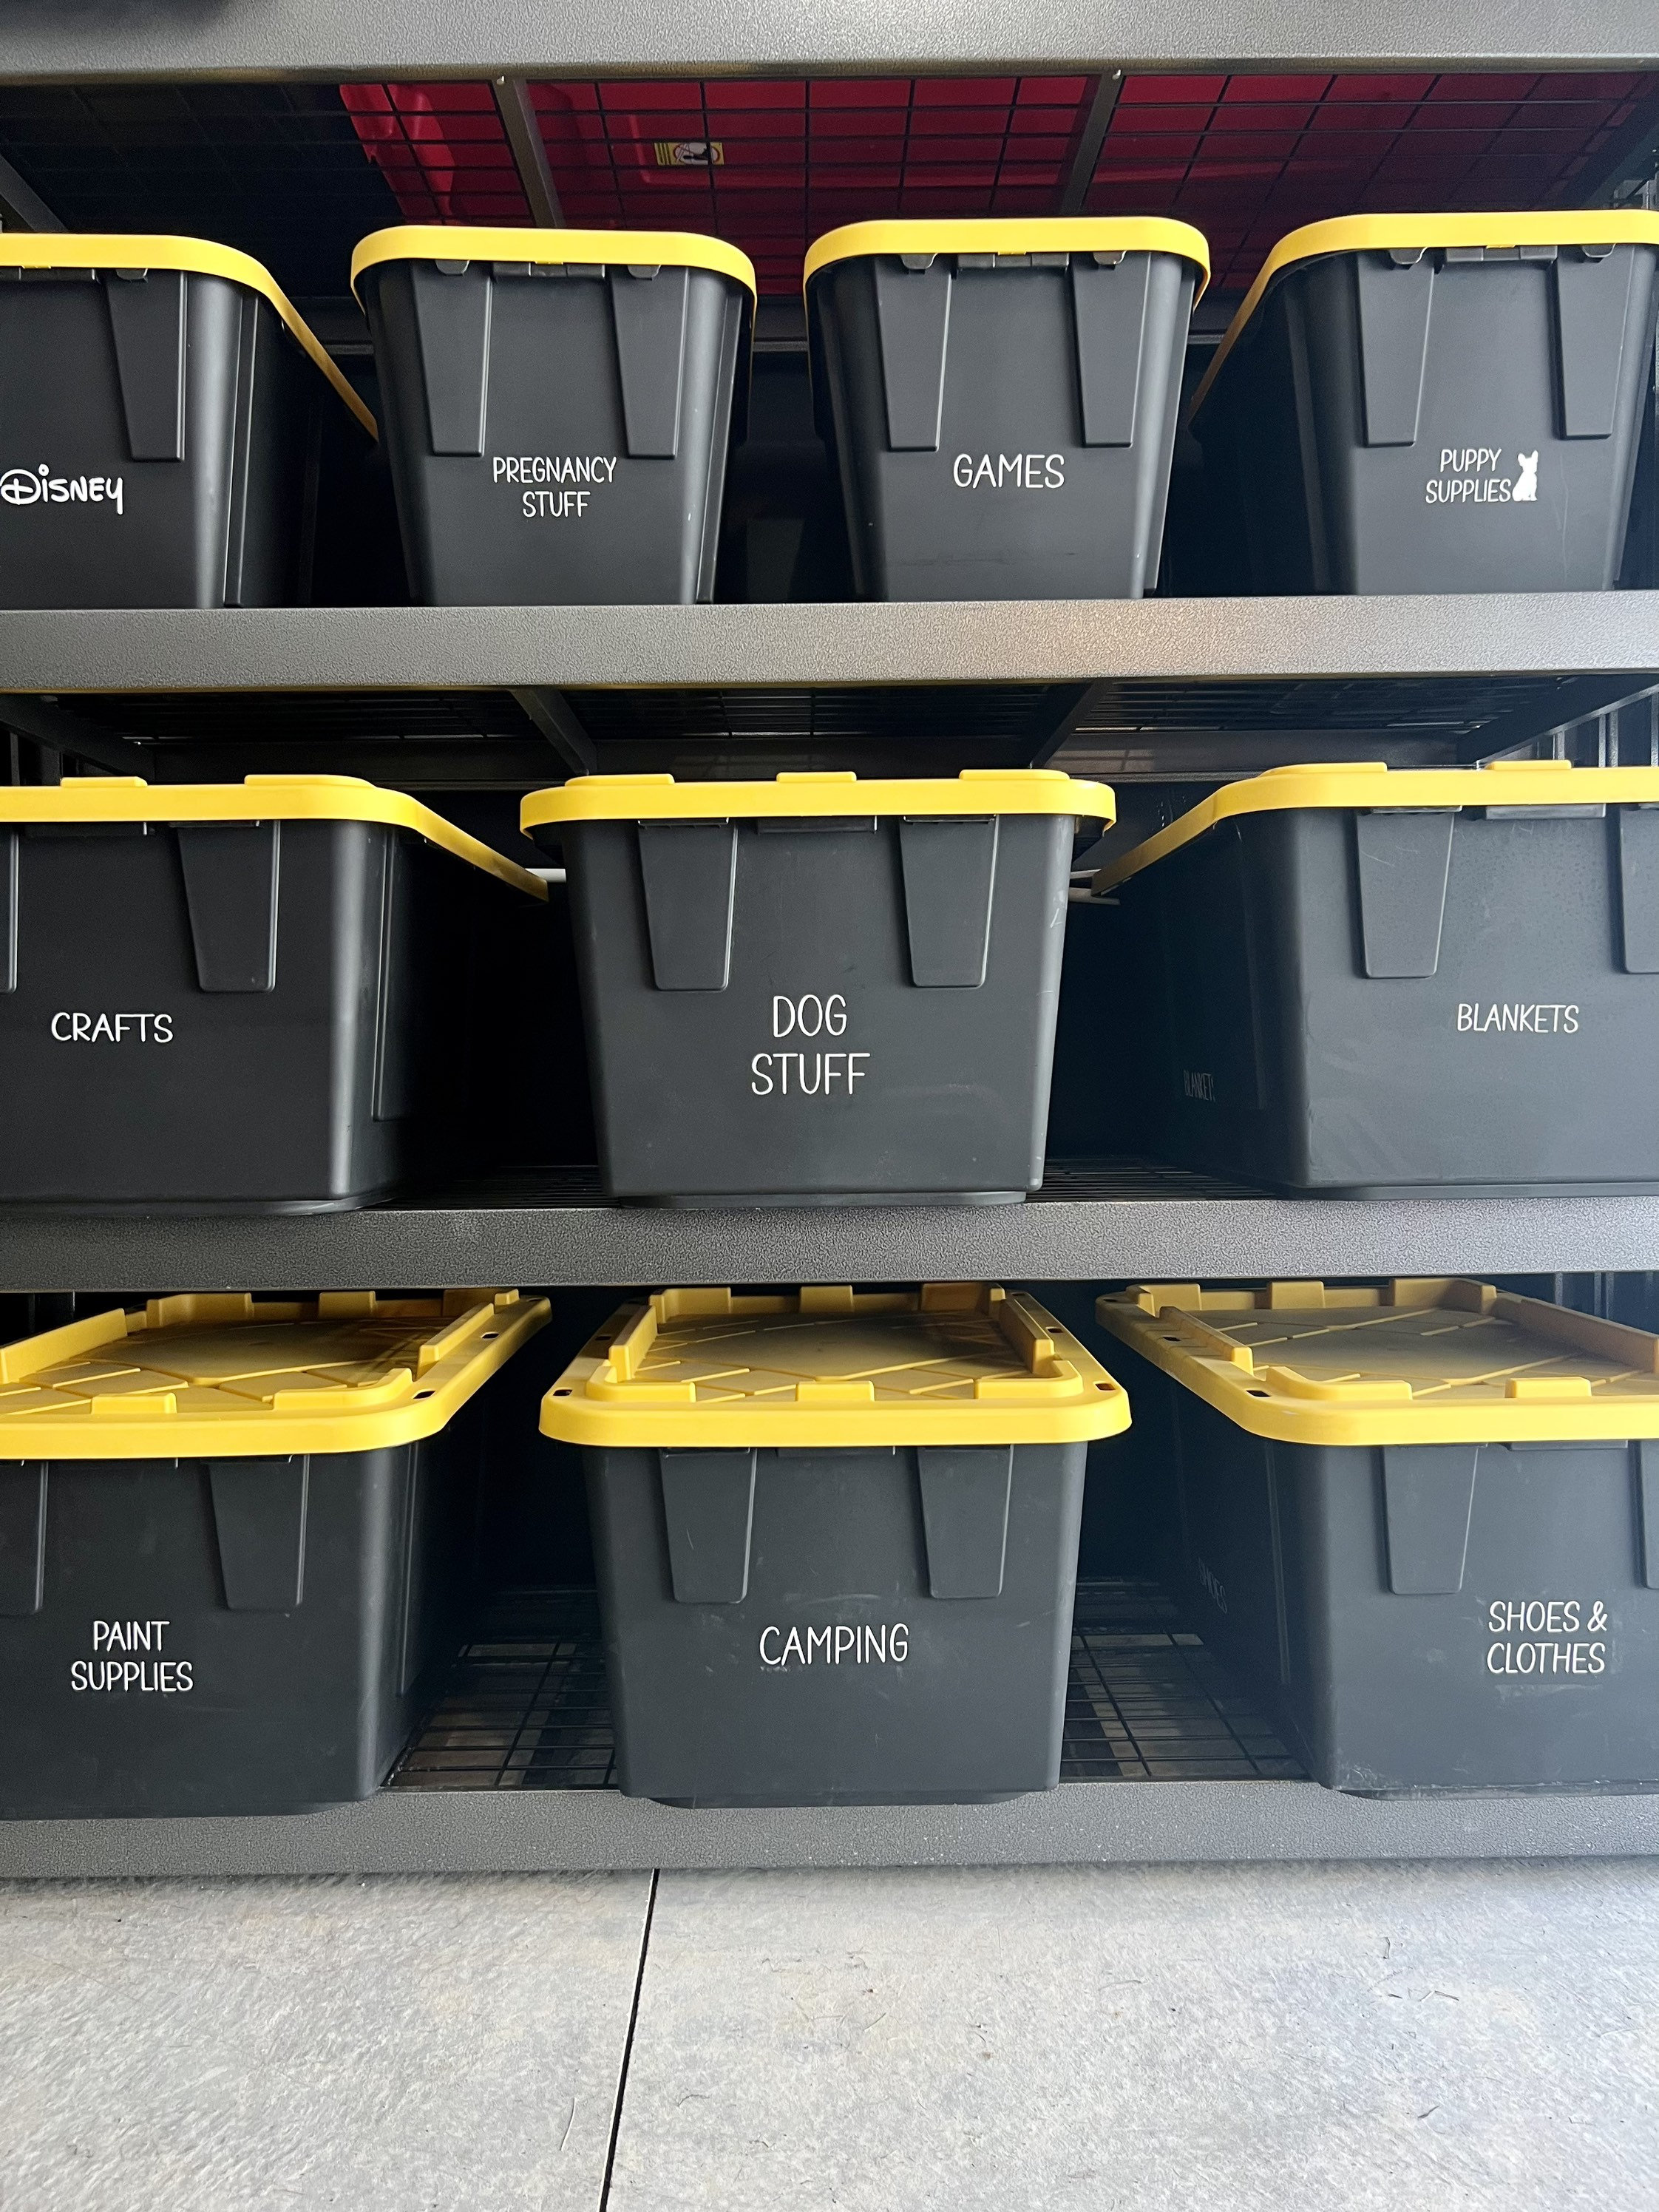 Labeling Our Garage Storage Bins - Organized-ish